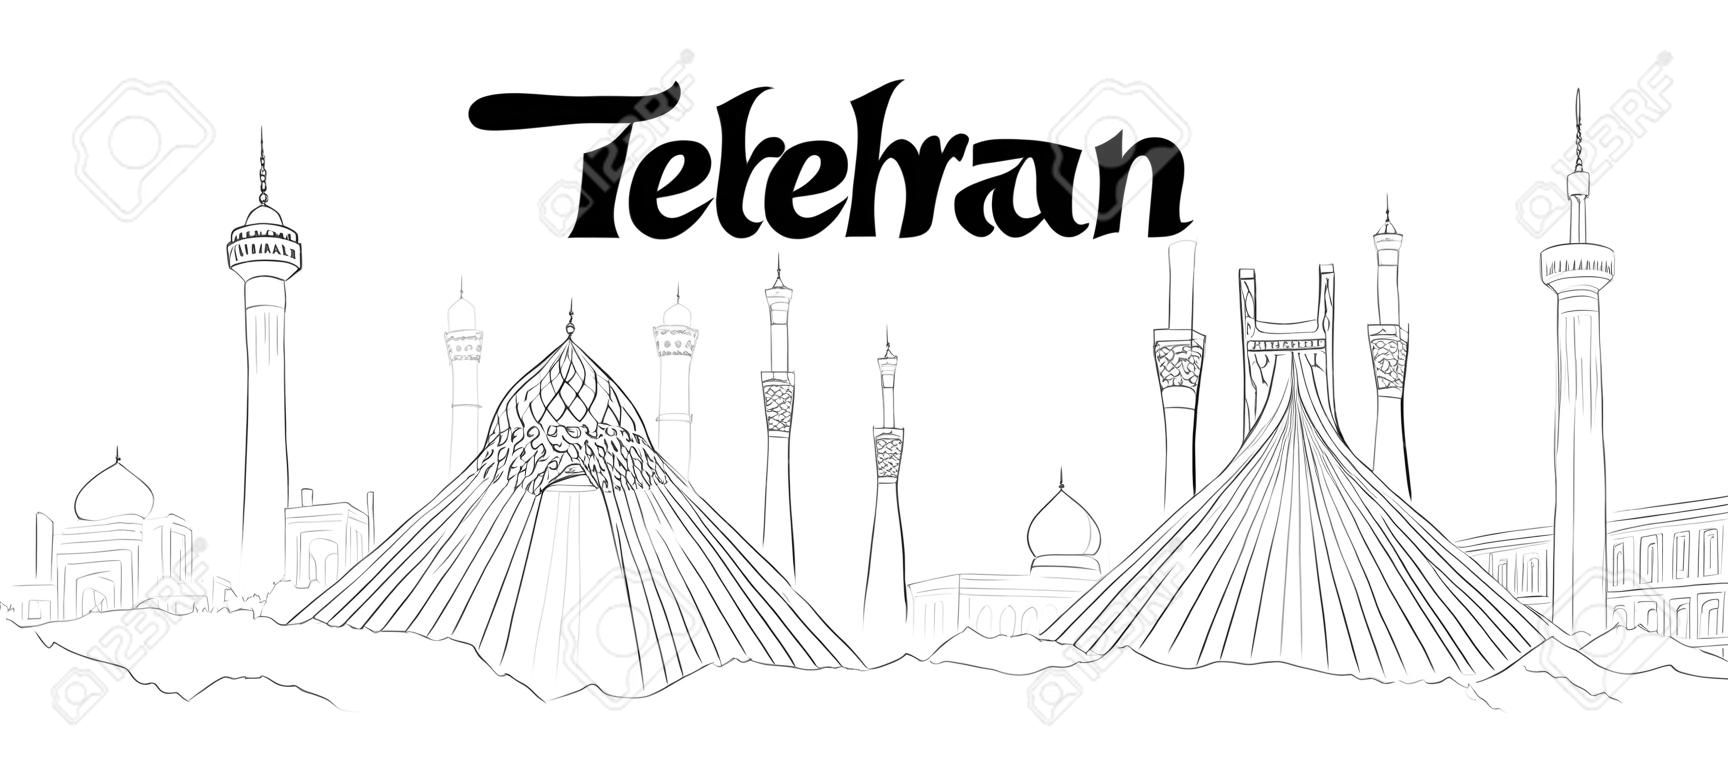 Tehran CITY city vector panoramic hand drawing illustration